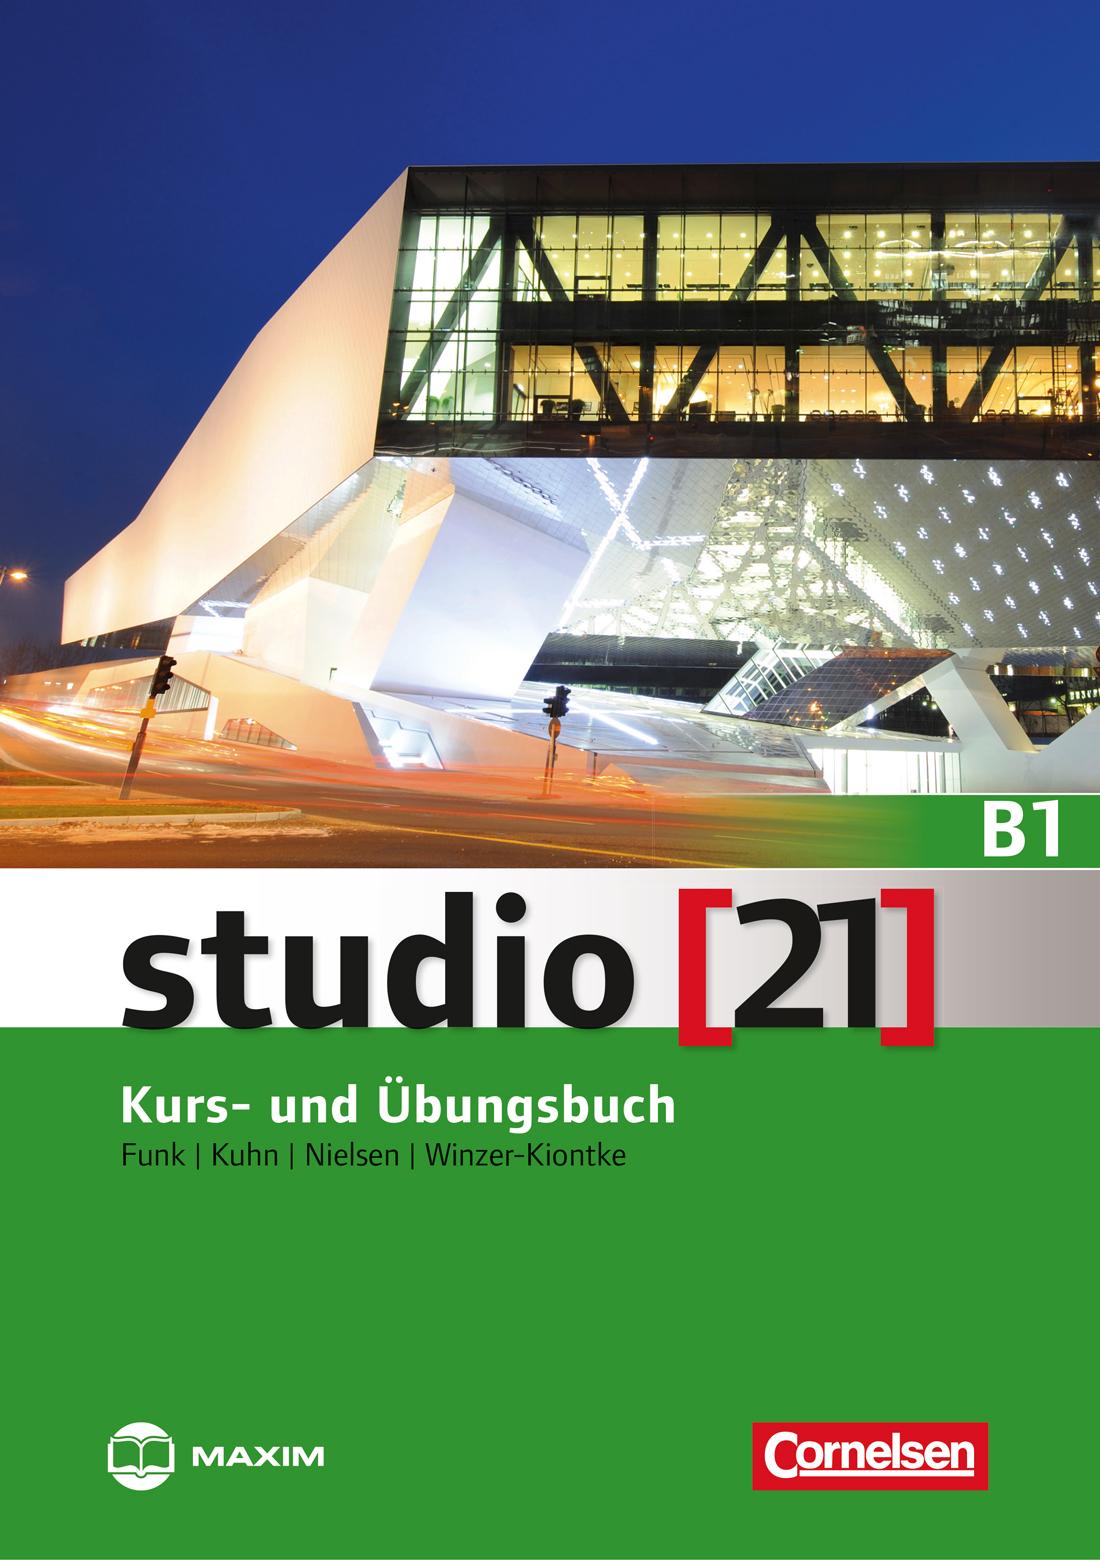 Britta Winzer-Kiontke, Christina Kuhn, Hermann Funk, Laura Nielsen - studio (21) B1 Kurs- und Übungsbuch